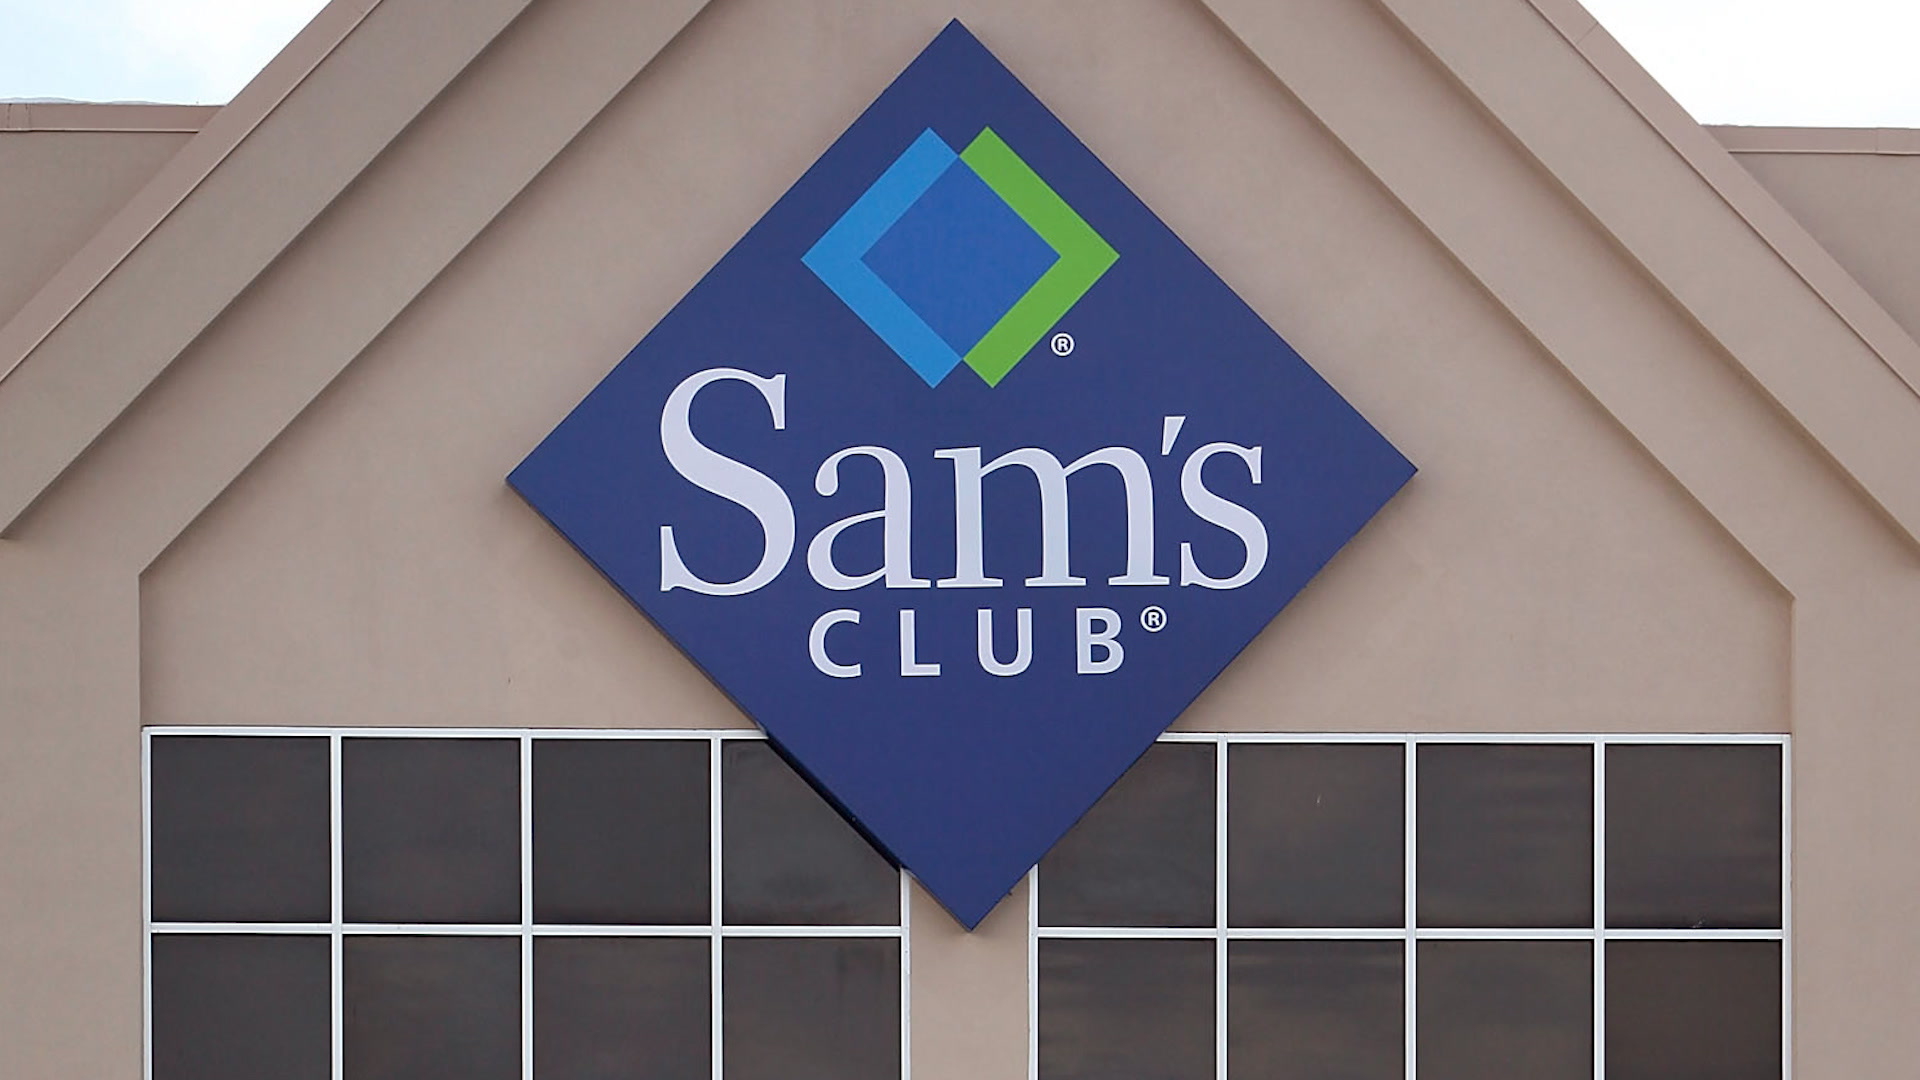 Sam's Club to close seven Illinois stores, terminate over 1,000